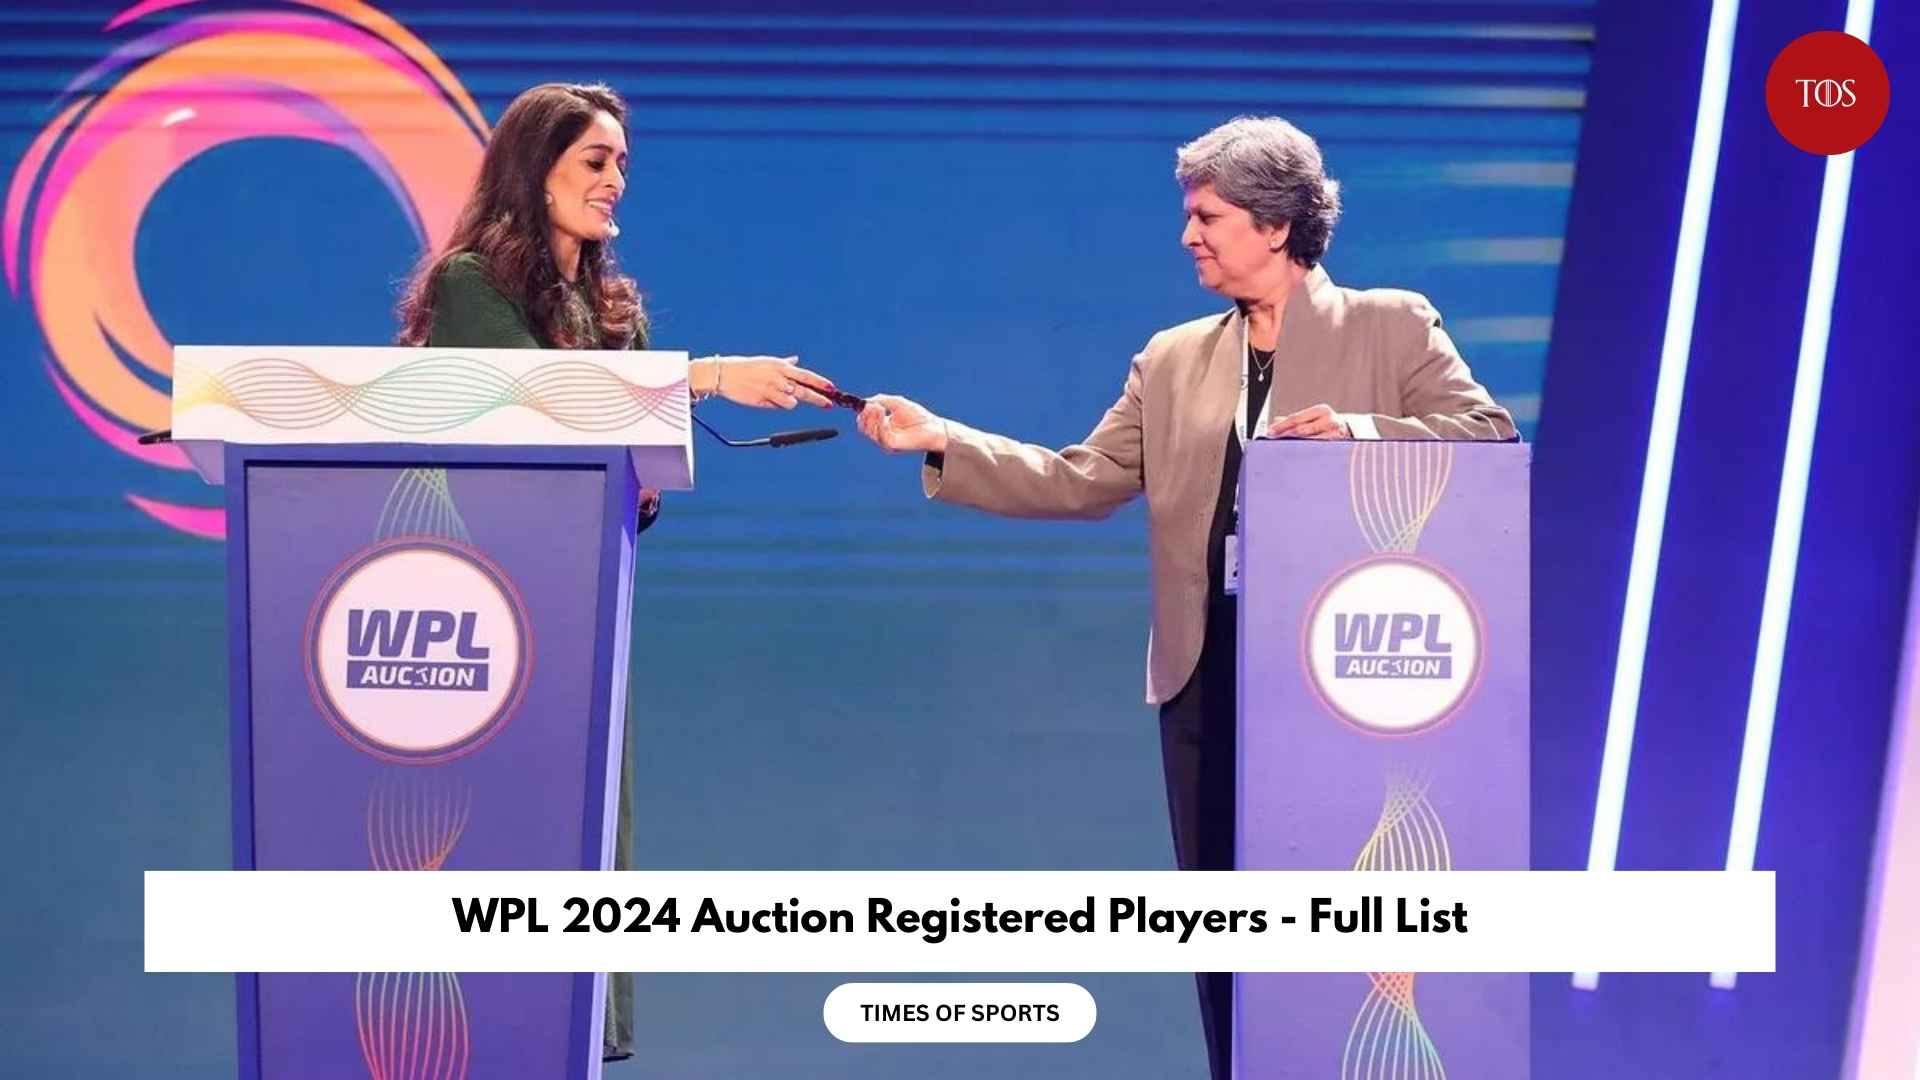 WPL 2024 Auction Registered Players Full List